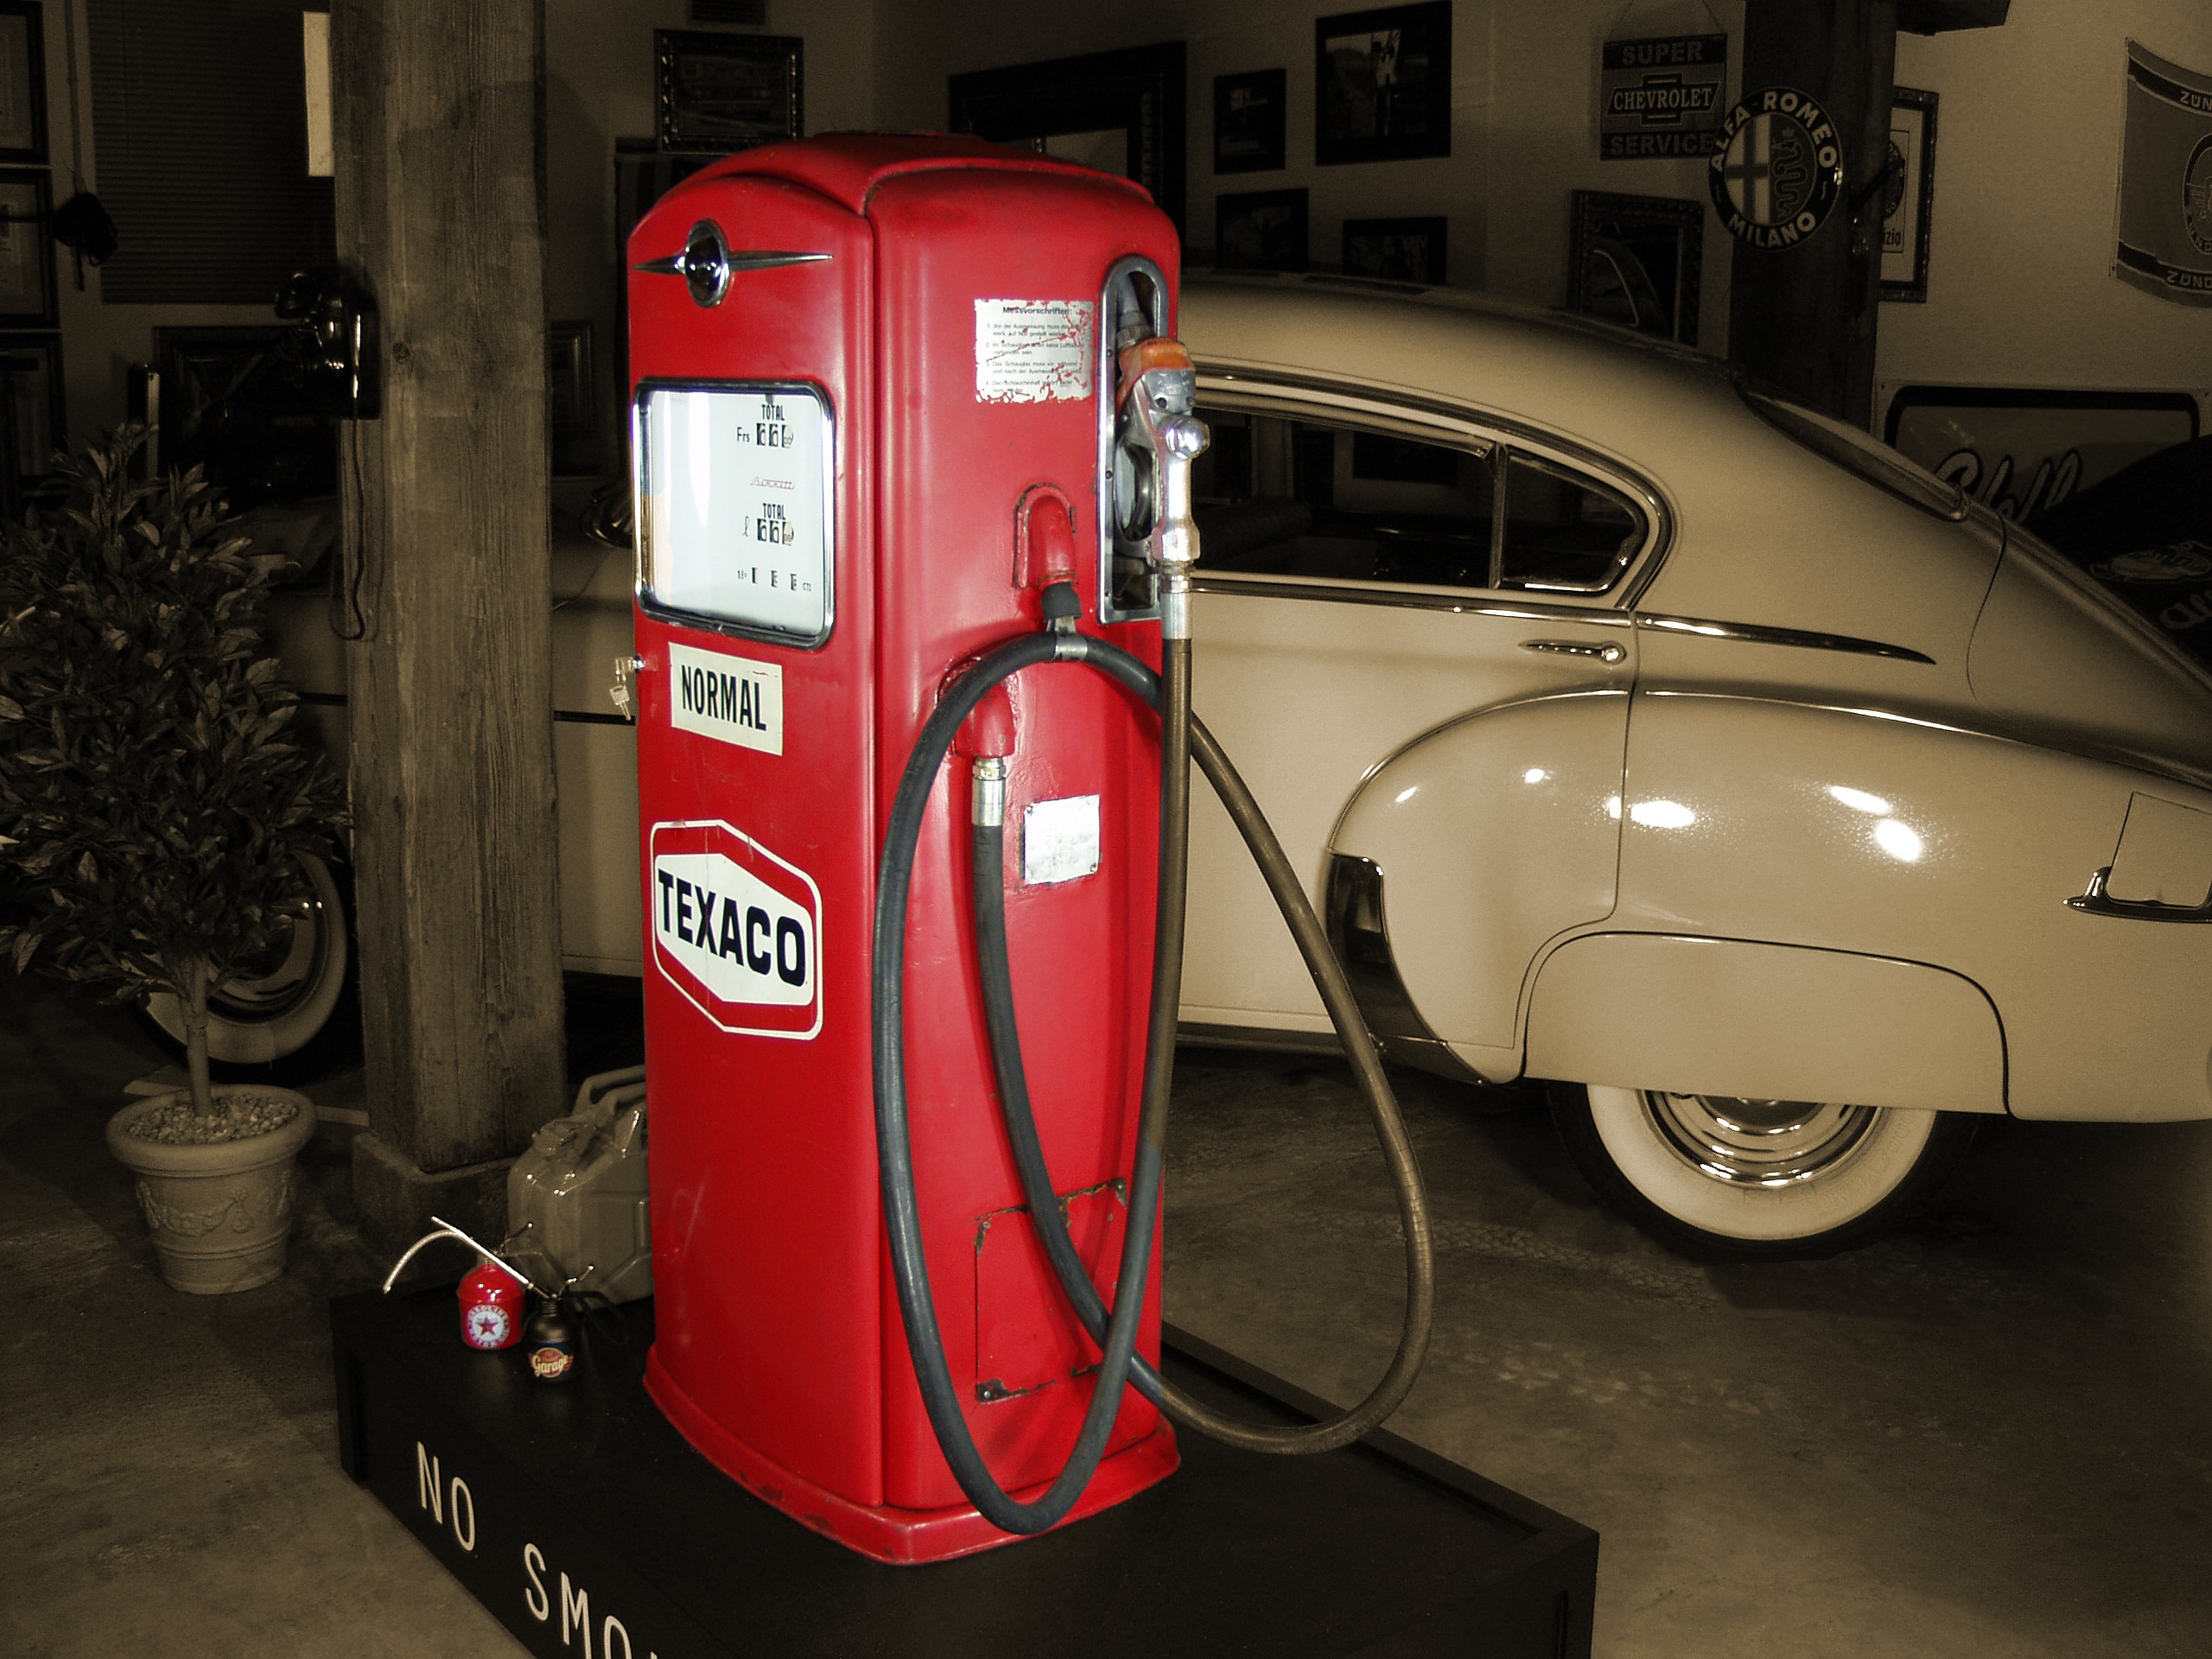 https://www.old-vintage-garage.de/fileadmin/cars_more/Zapfsaeule_Texaco/Bennett-21-Old-Vintage-Garage-Zapfsaeule-Texaco-Benzin-Bennet-1957-Modell966-vintage-gas-pump-Tanksaeule-tankstelle-50er-oldtimersammlung.jpg